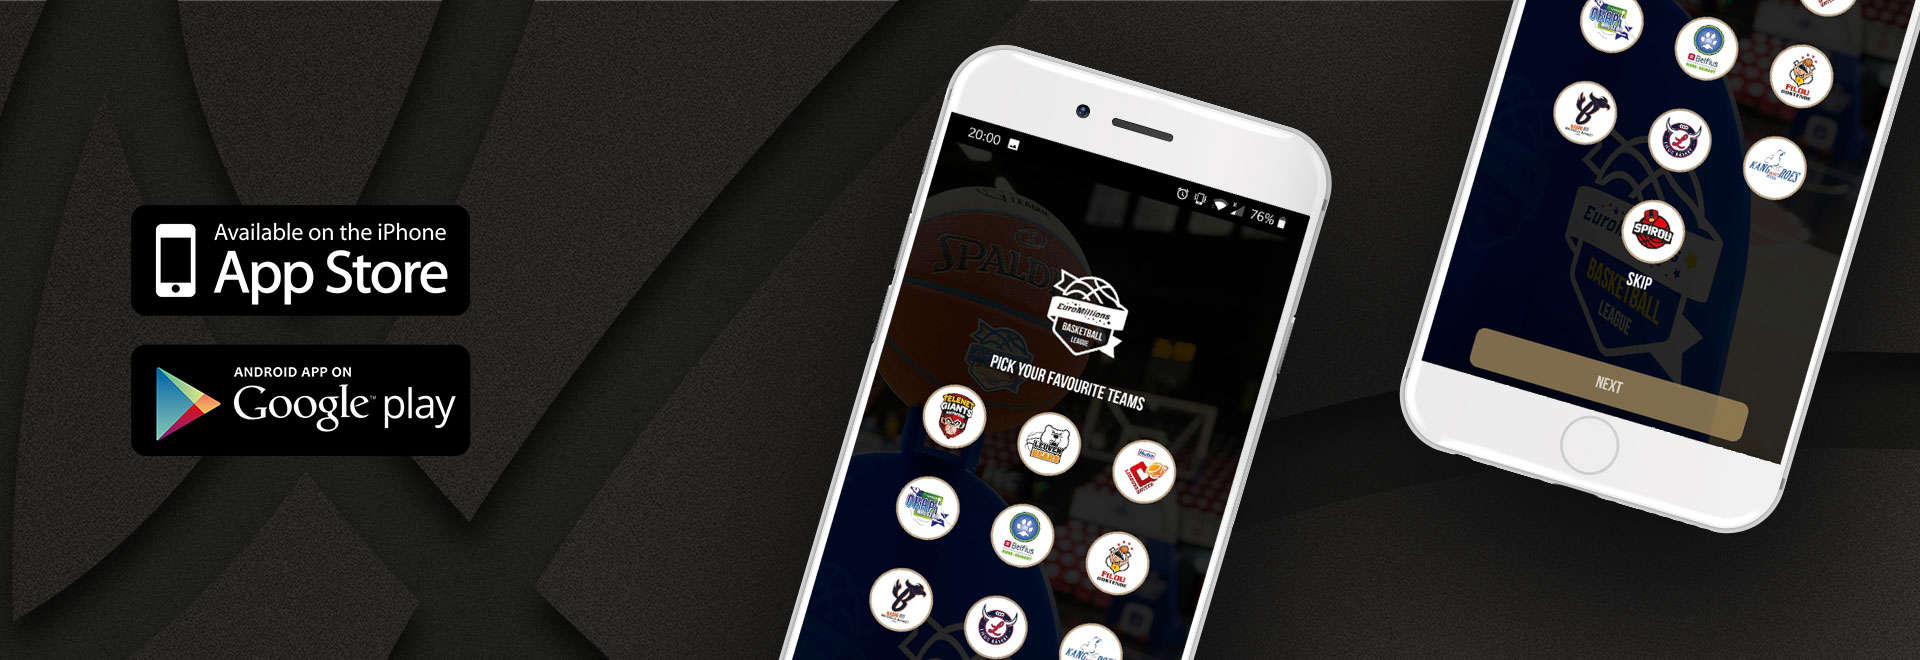 Pro Basketball League mobile app